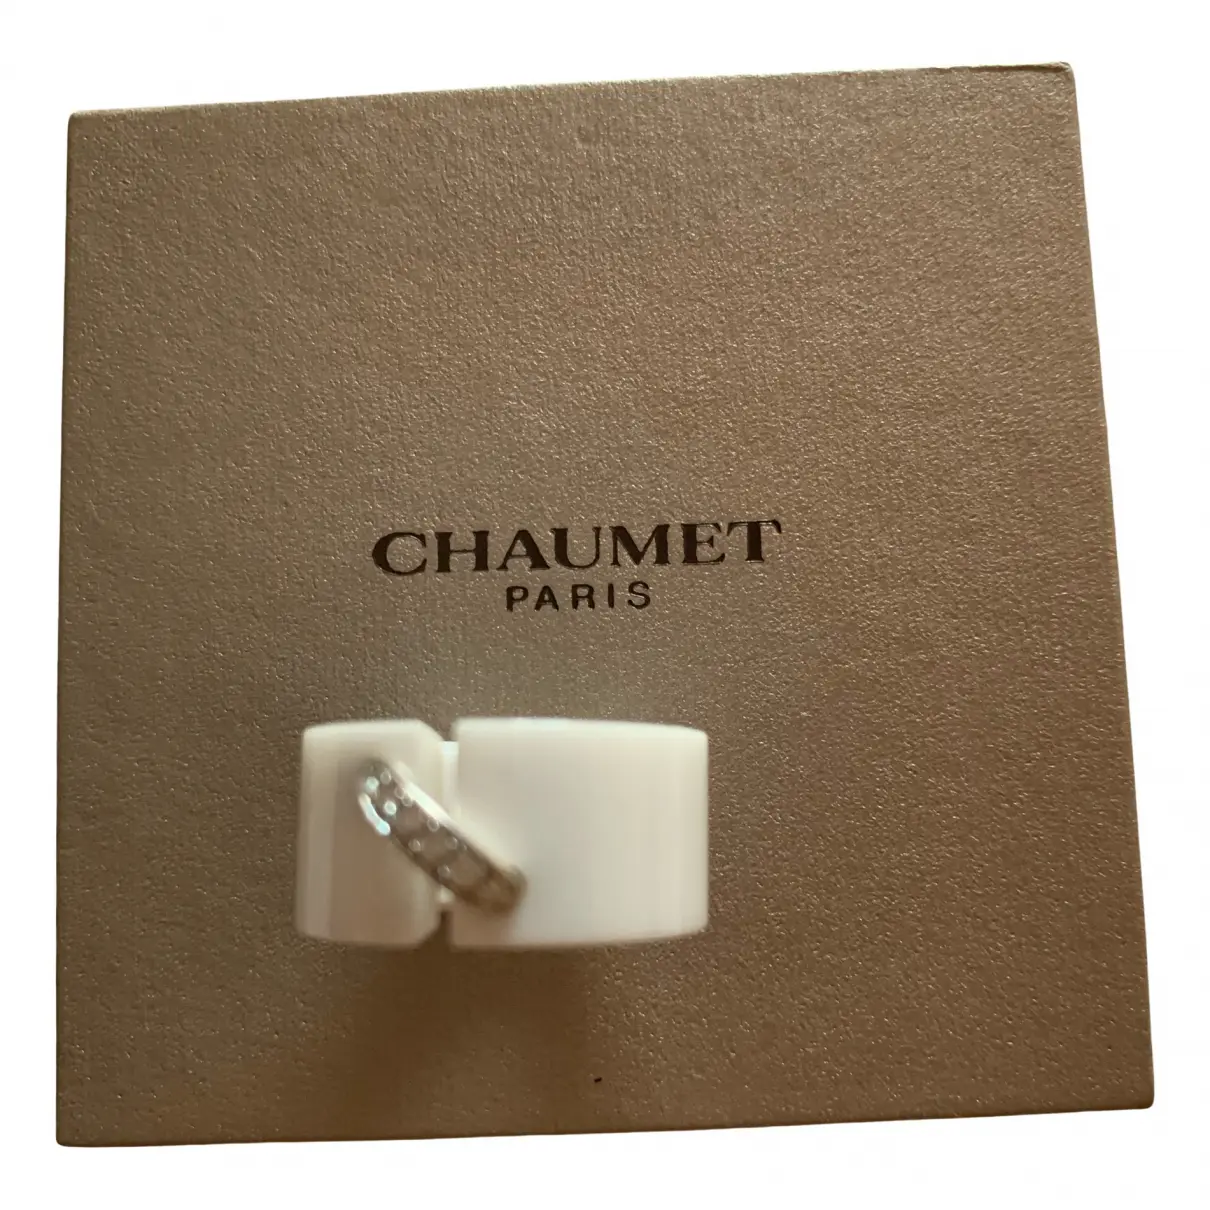 Buy Chaumet Liens ceramic ring online